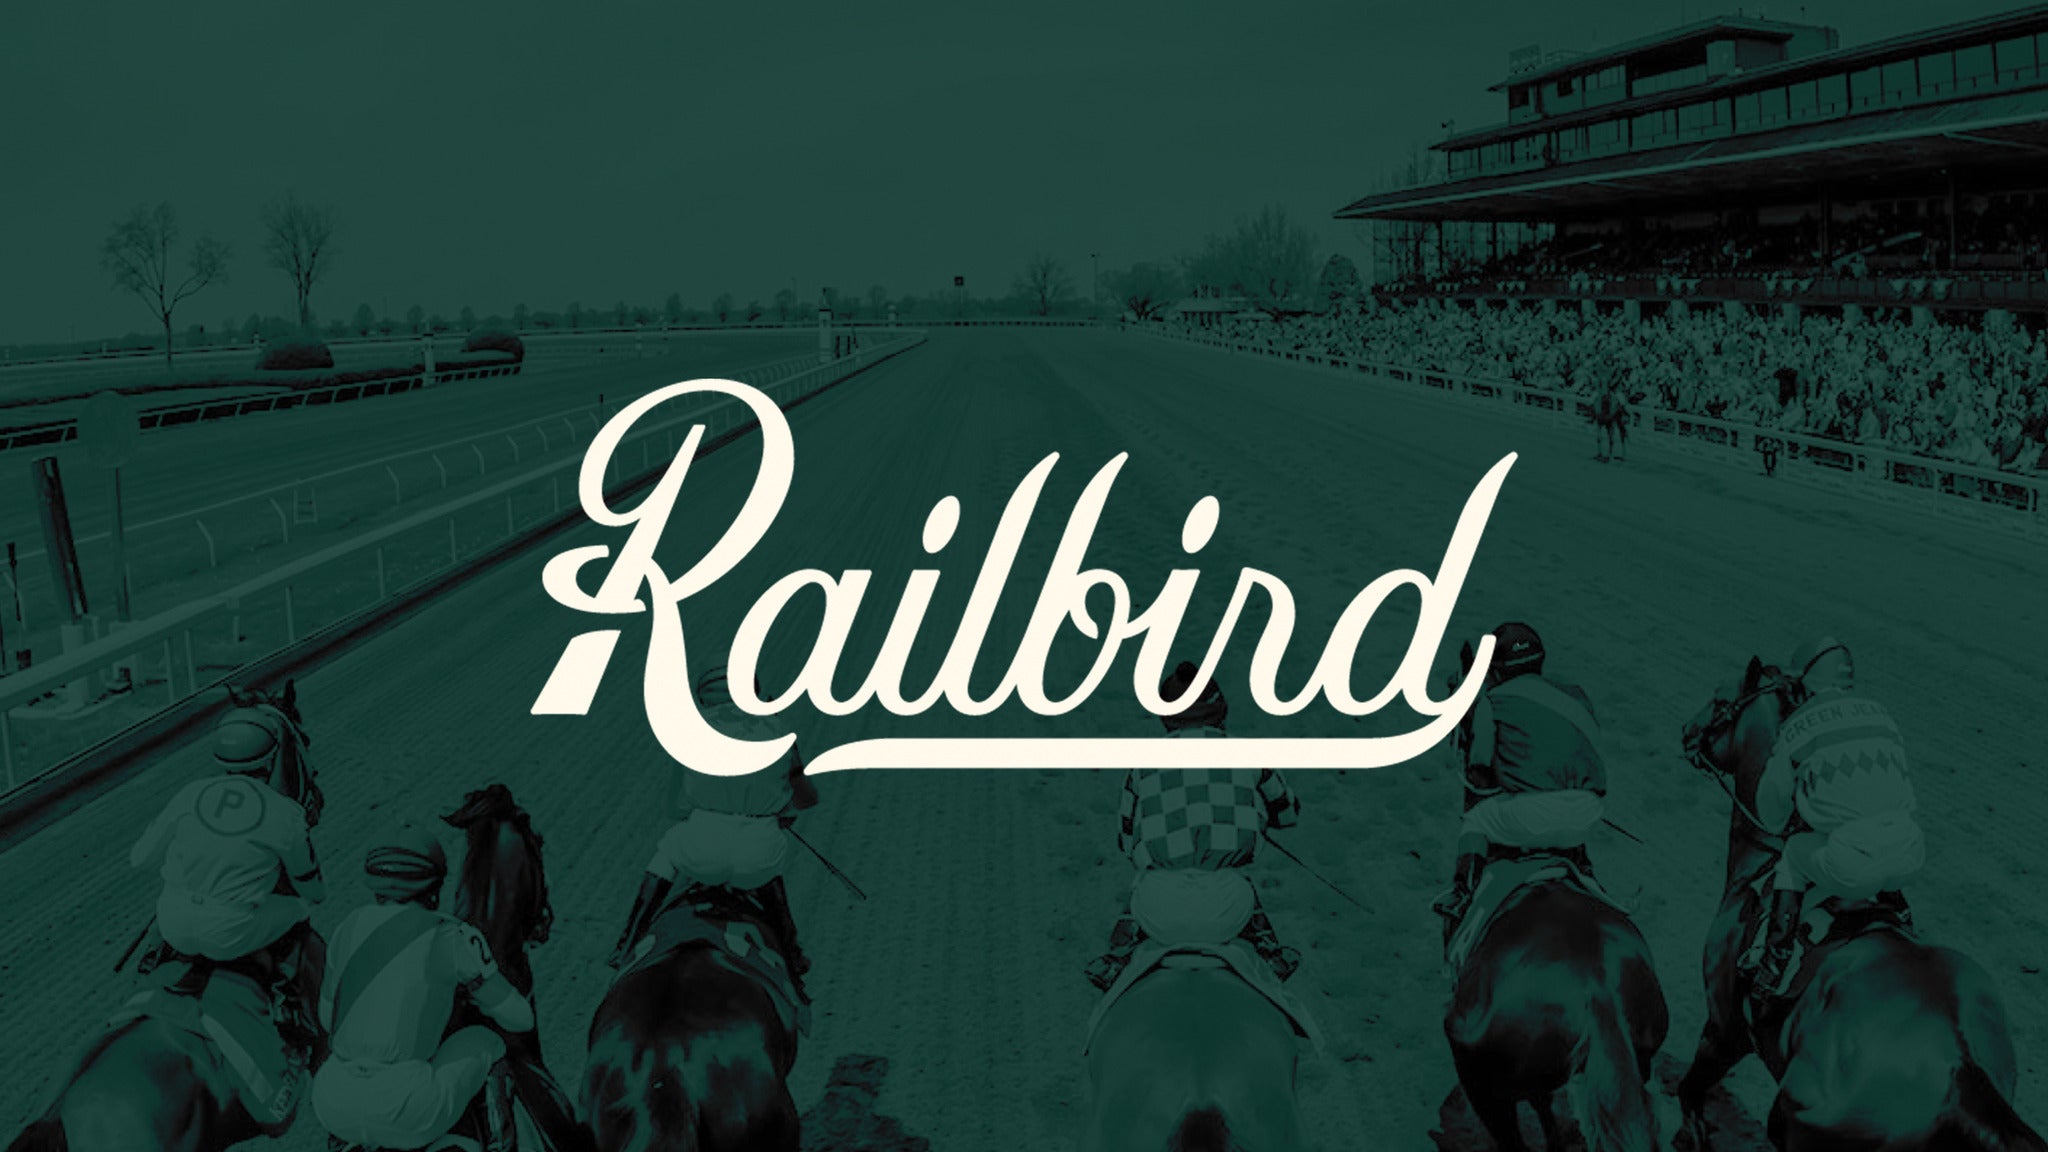 Railbird Festival presale information on freepresalepasswords.com